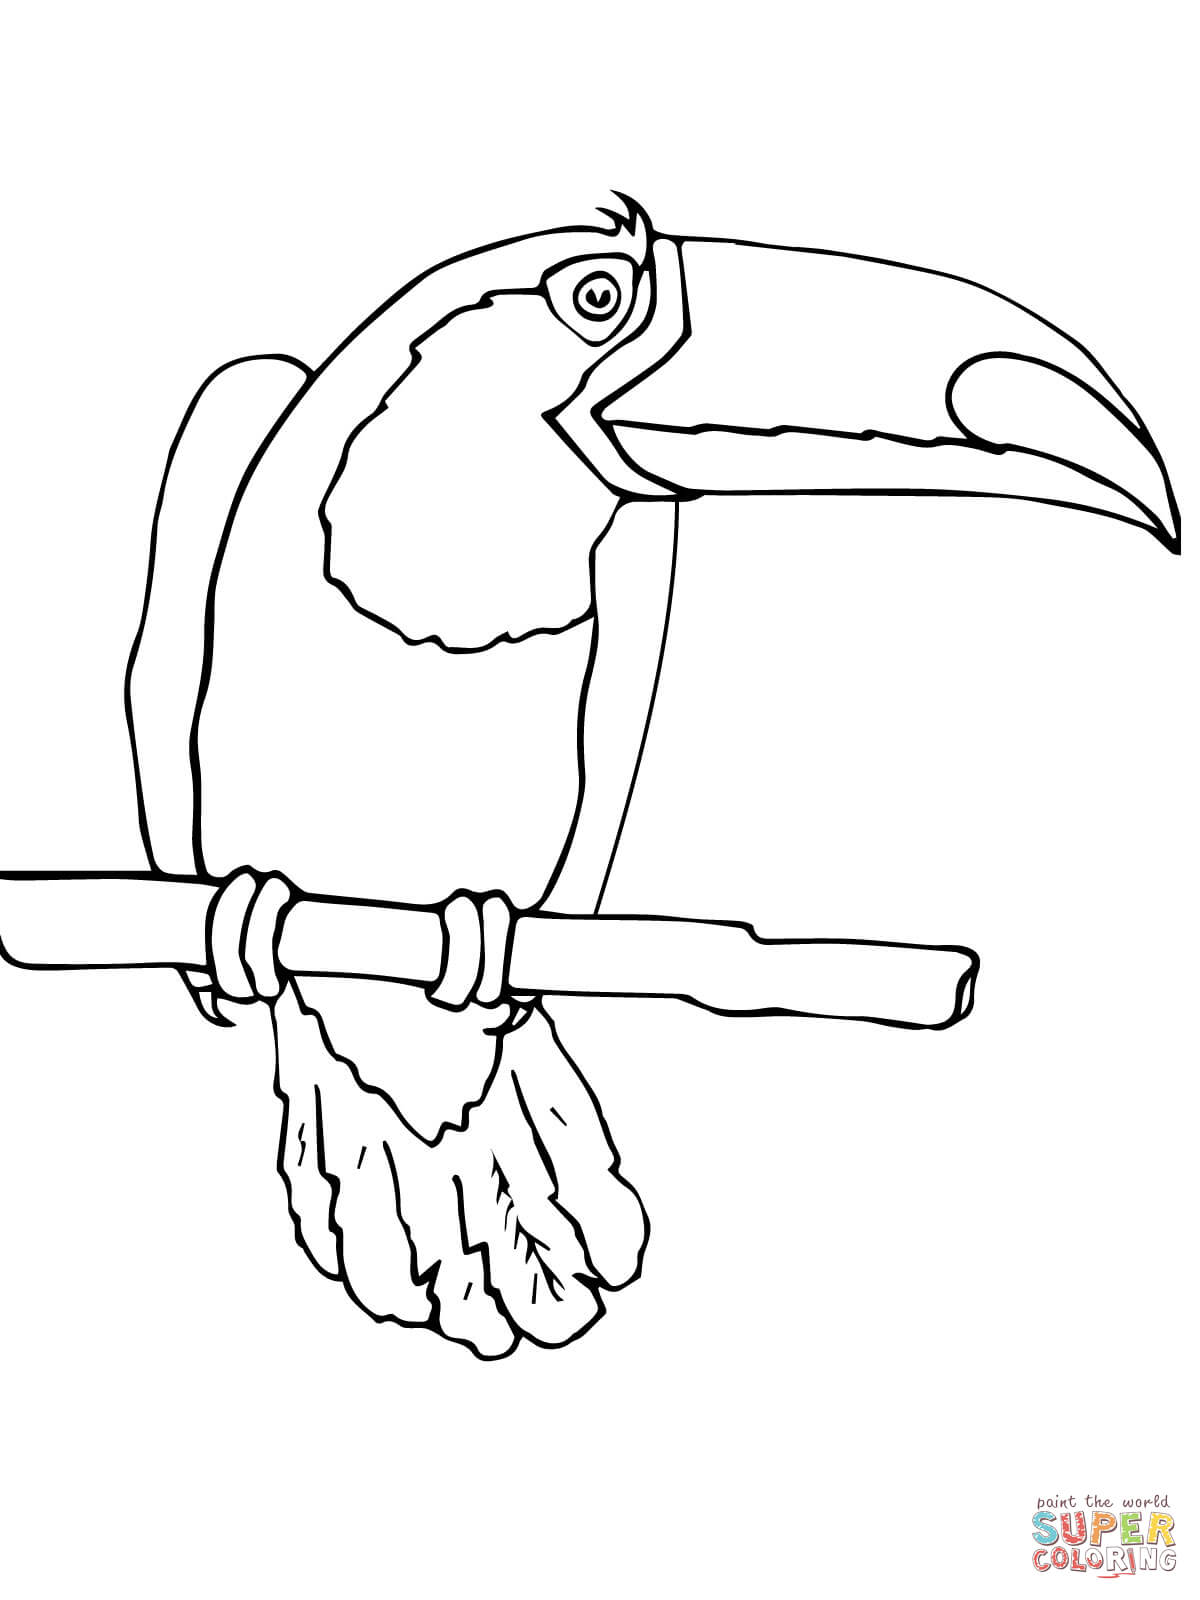 rainforest toucan coloring page